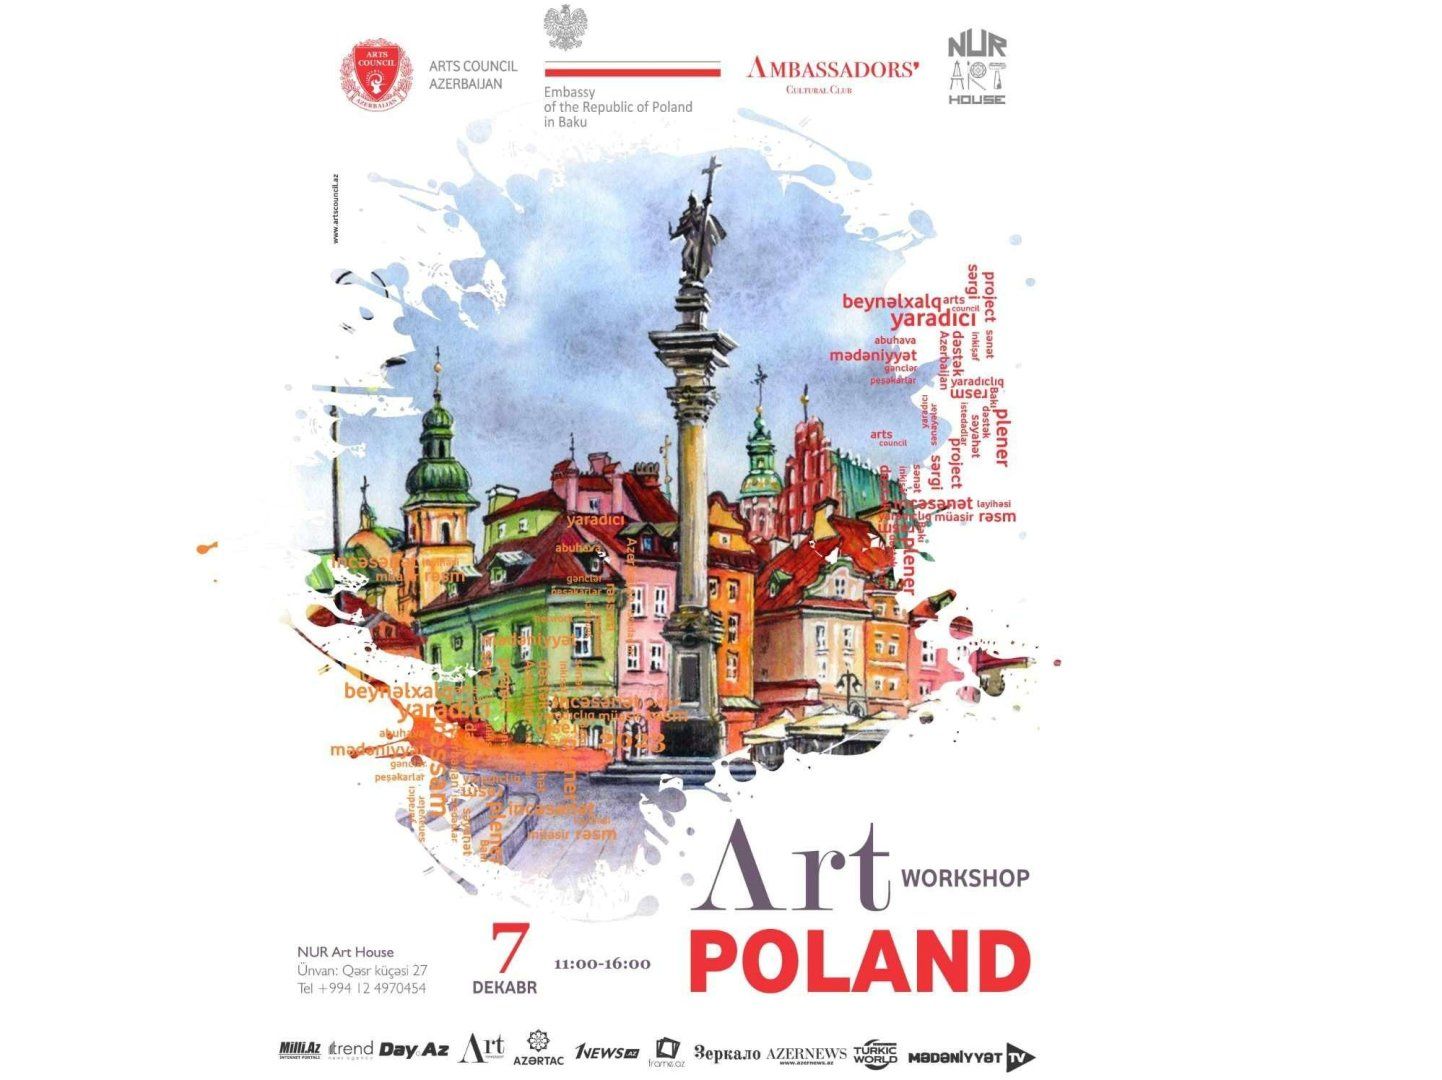 NUR Art House to host workshop dedicated to Poland